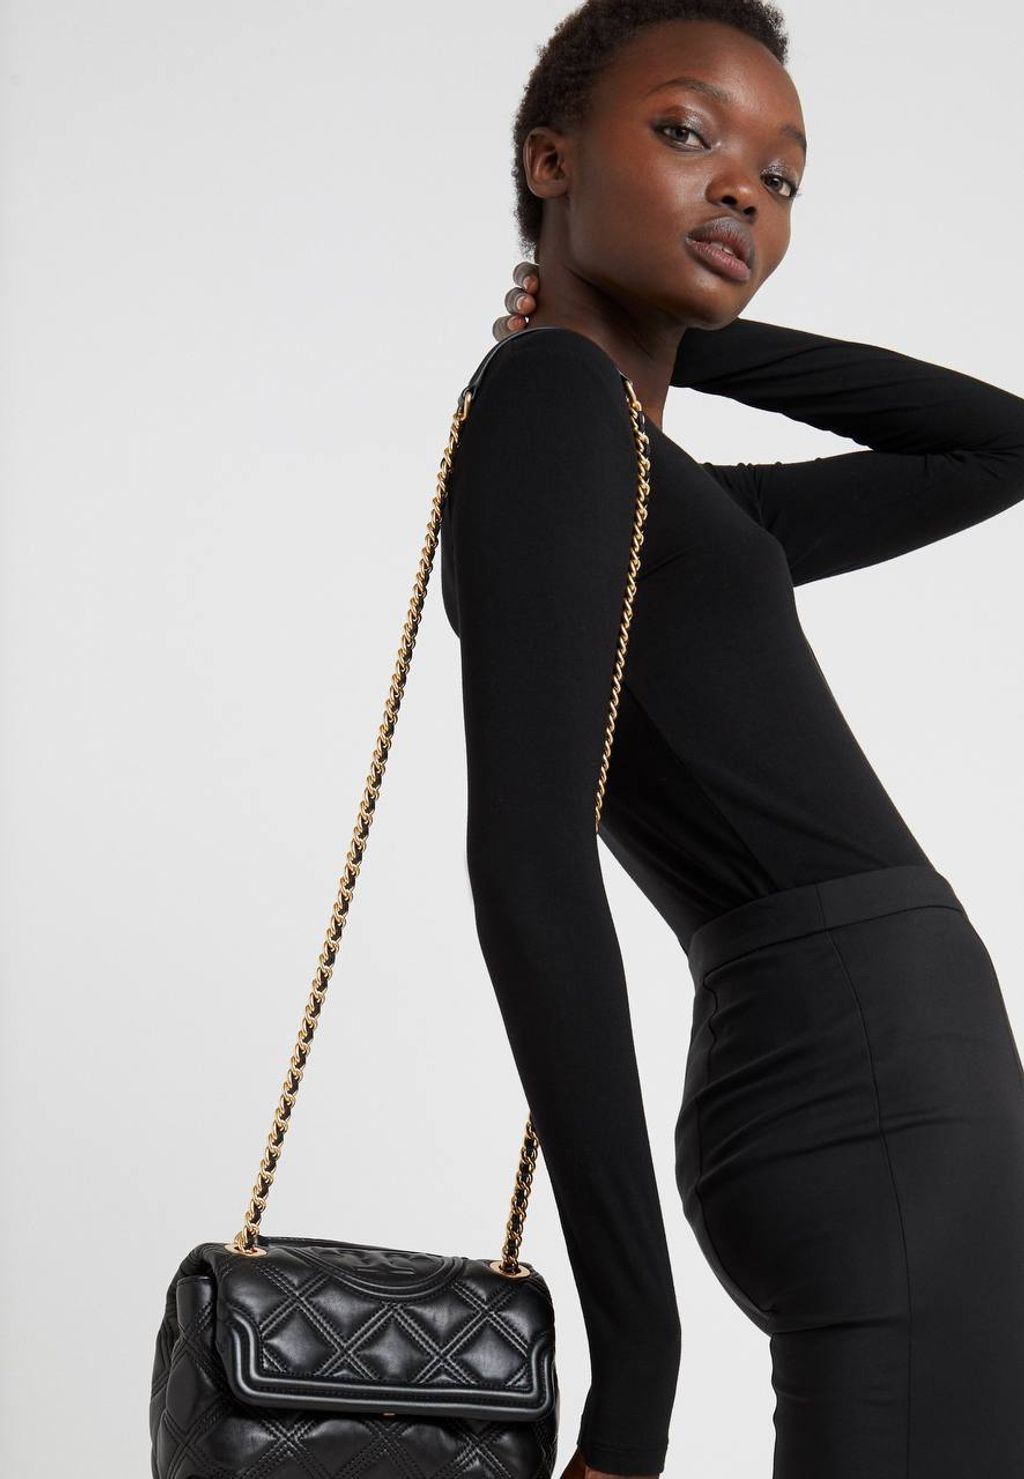 Small Fleming Soft Convertible Shoulder Bag: Women's Handbags